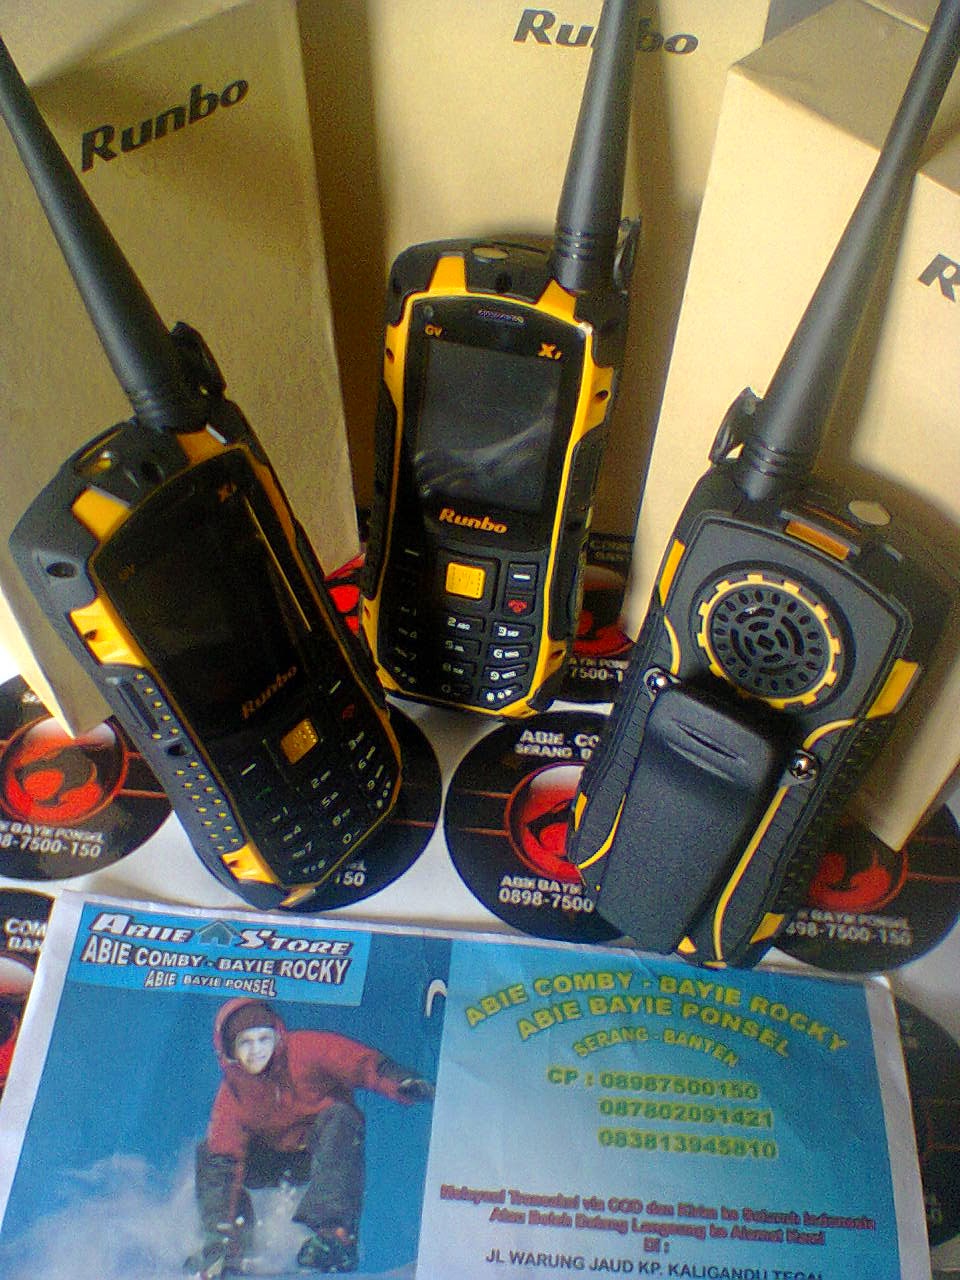 RUNBO X1 HANDPHONE MULTI FUNGSI BISA BUAT HT DENGAN ORARI VHF WATERPROOF,SHOCKPROOF,DUSTPROOOF.